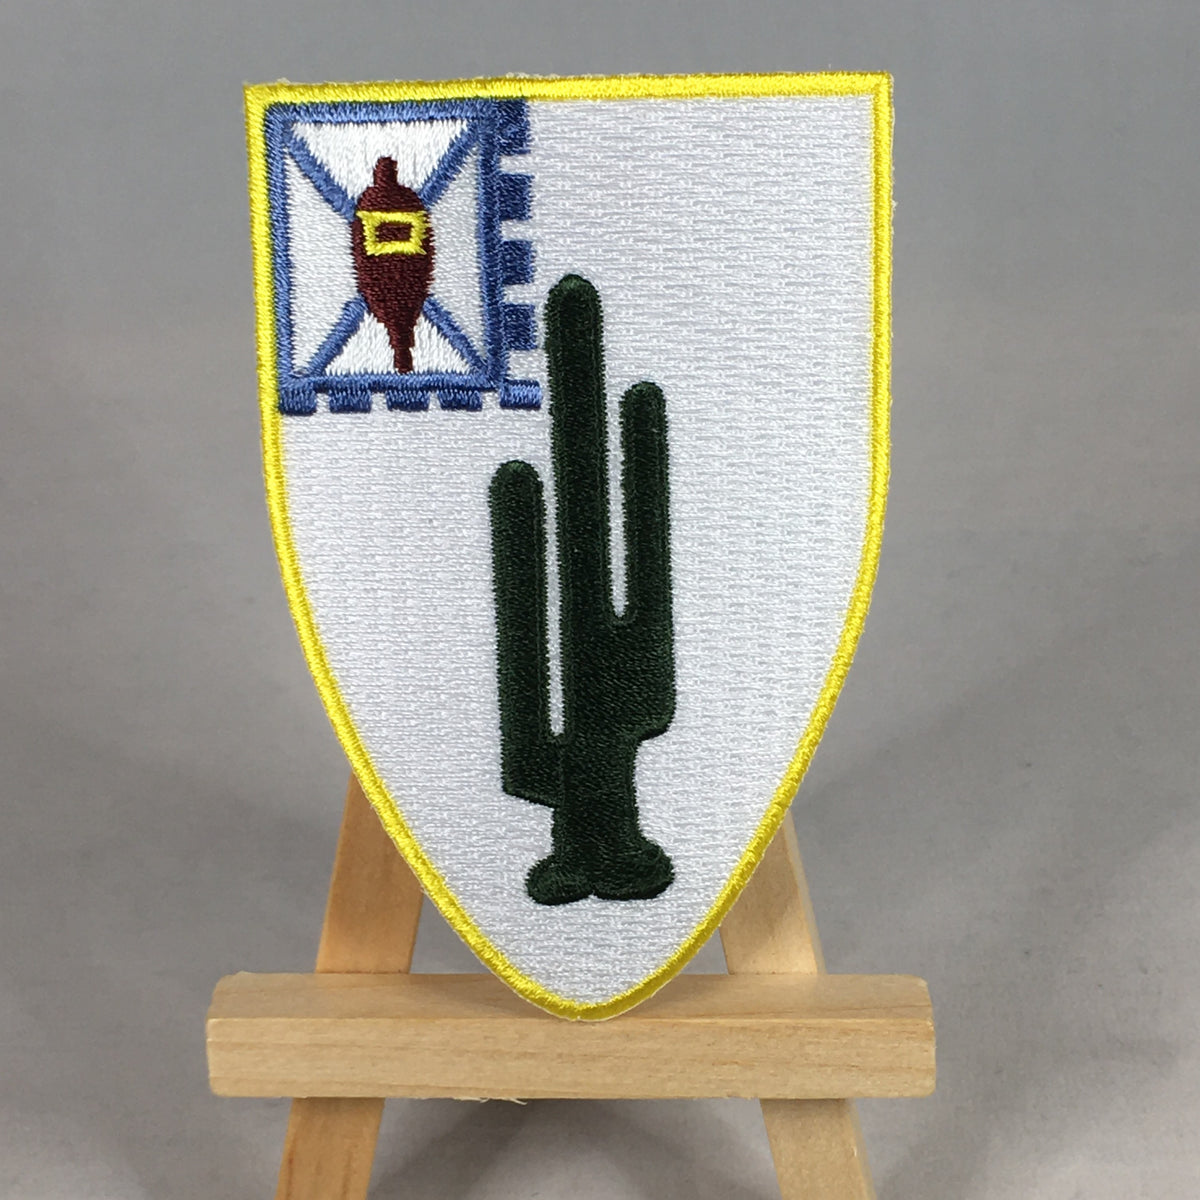 35th Infantry Division "Cacti Unit" Patch